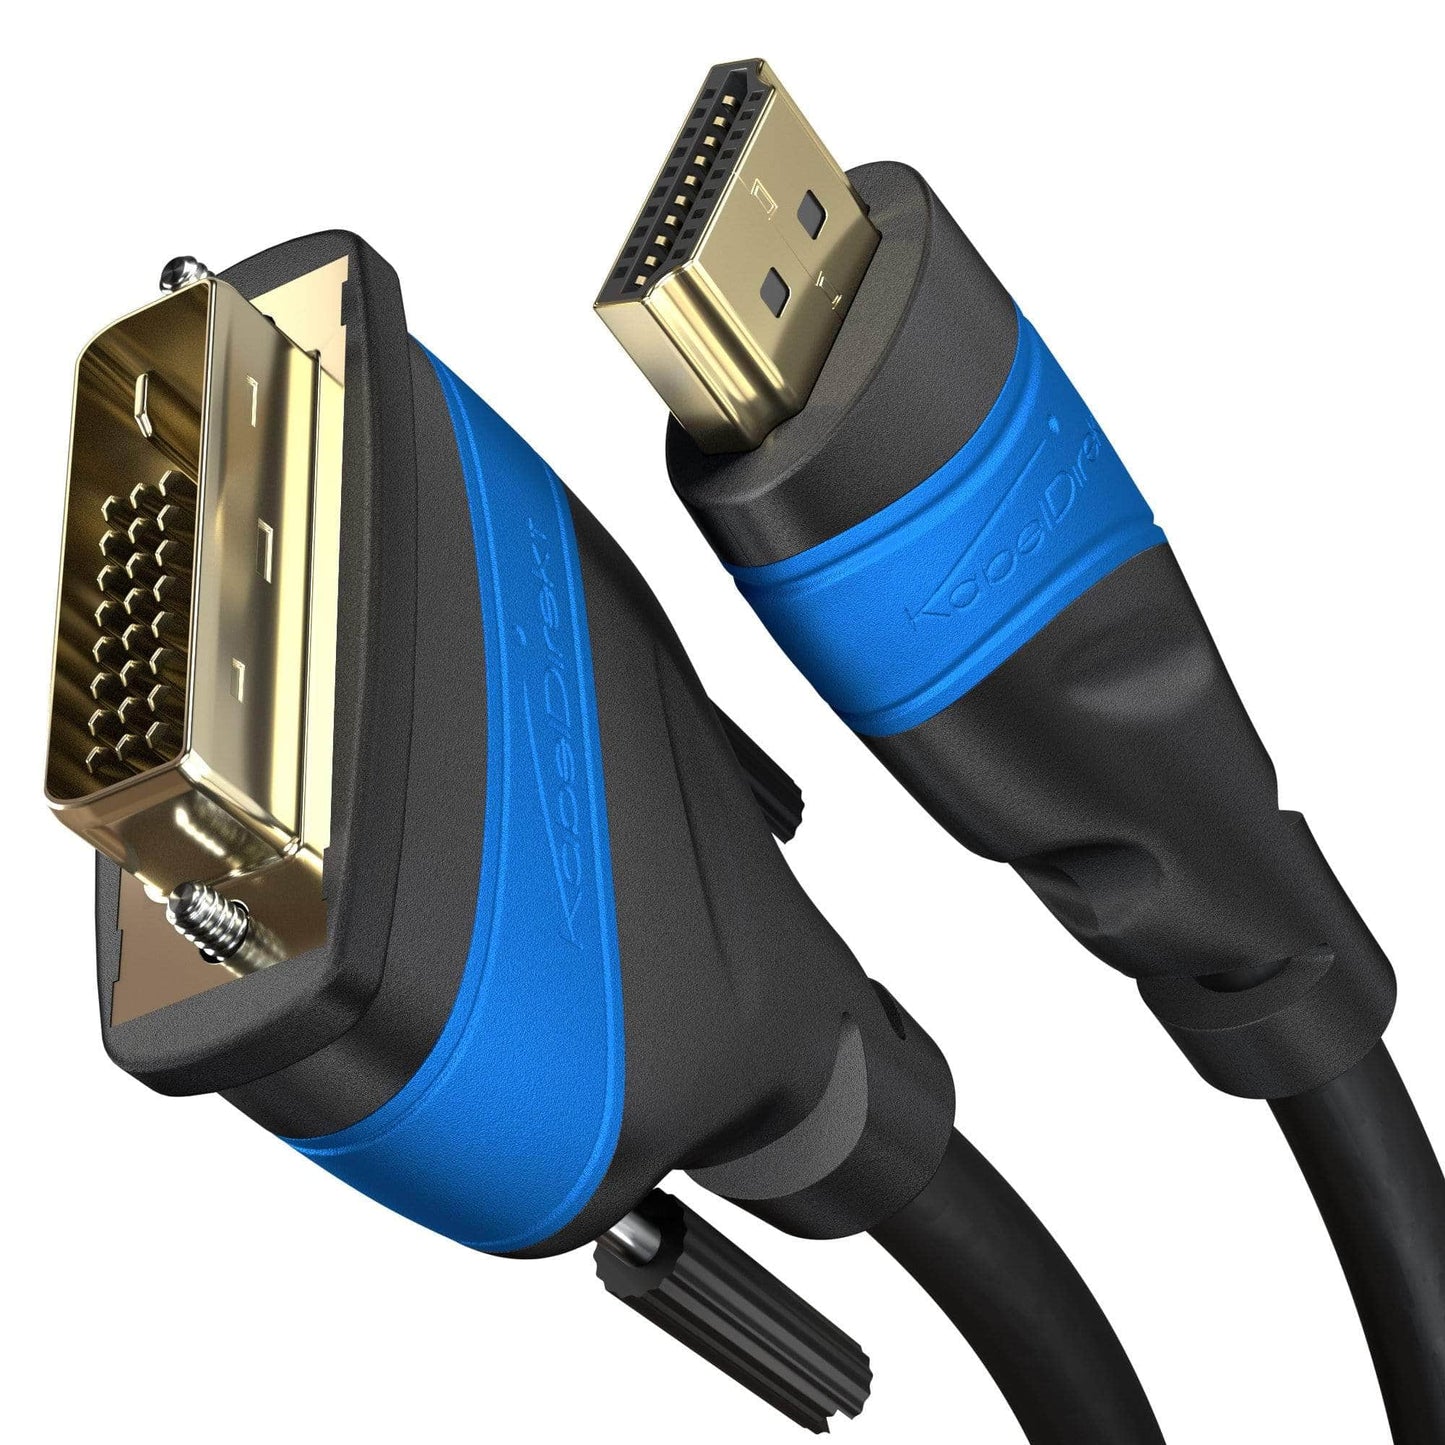 Câble adaptateur HDMI-DVI – bidirectionnel